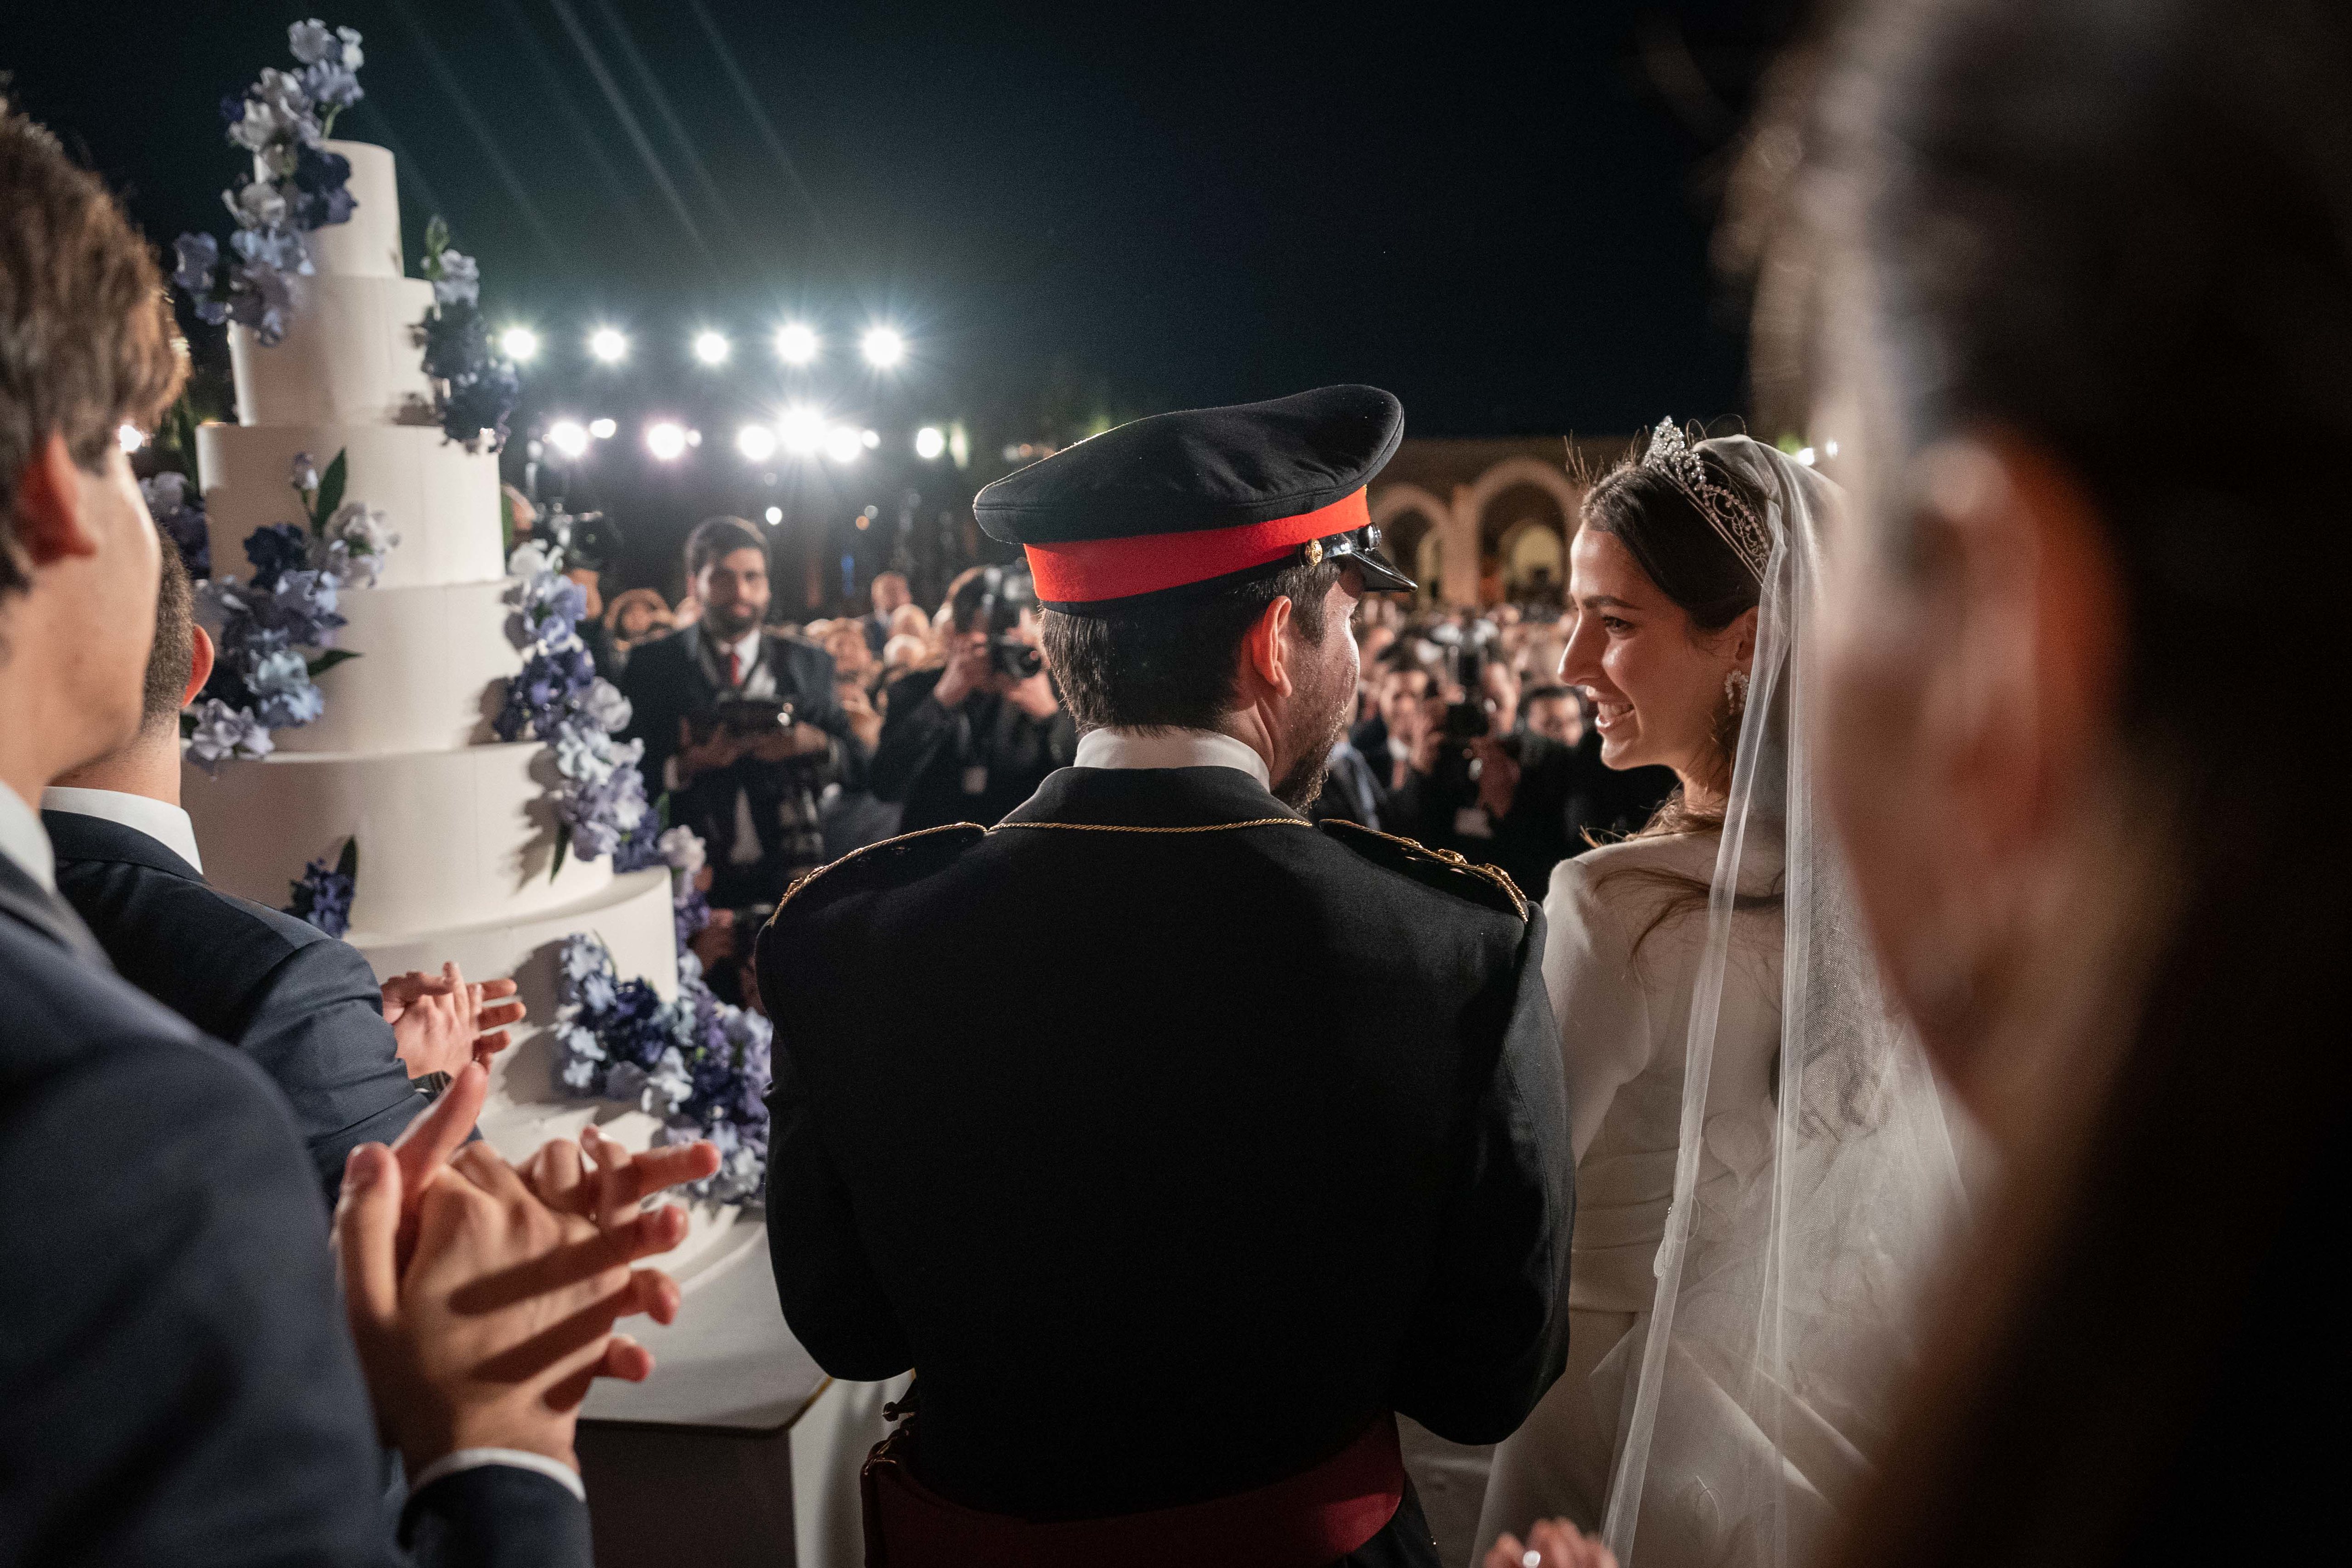 HRH the Crown Prince Hussein of Jordan and Rajwa Alseif's wedding cake cutting